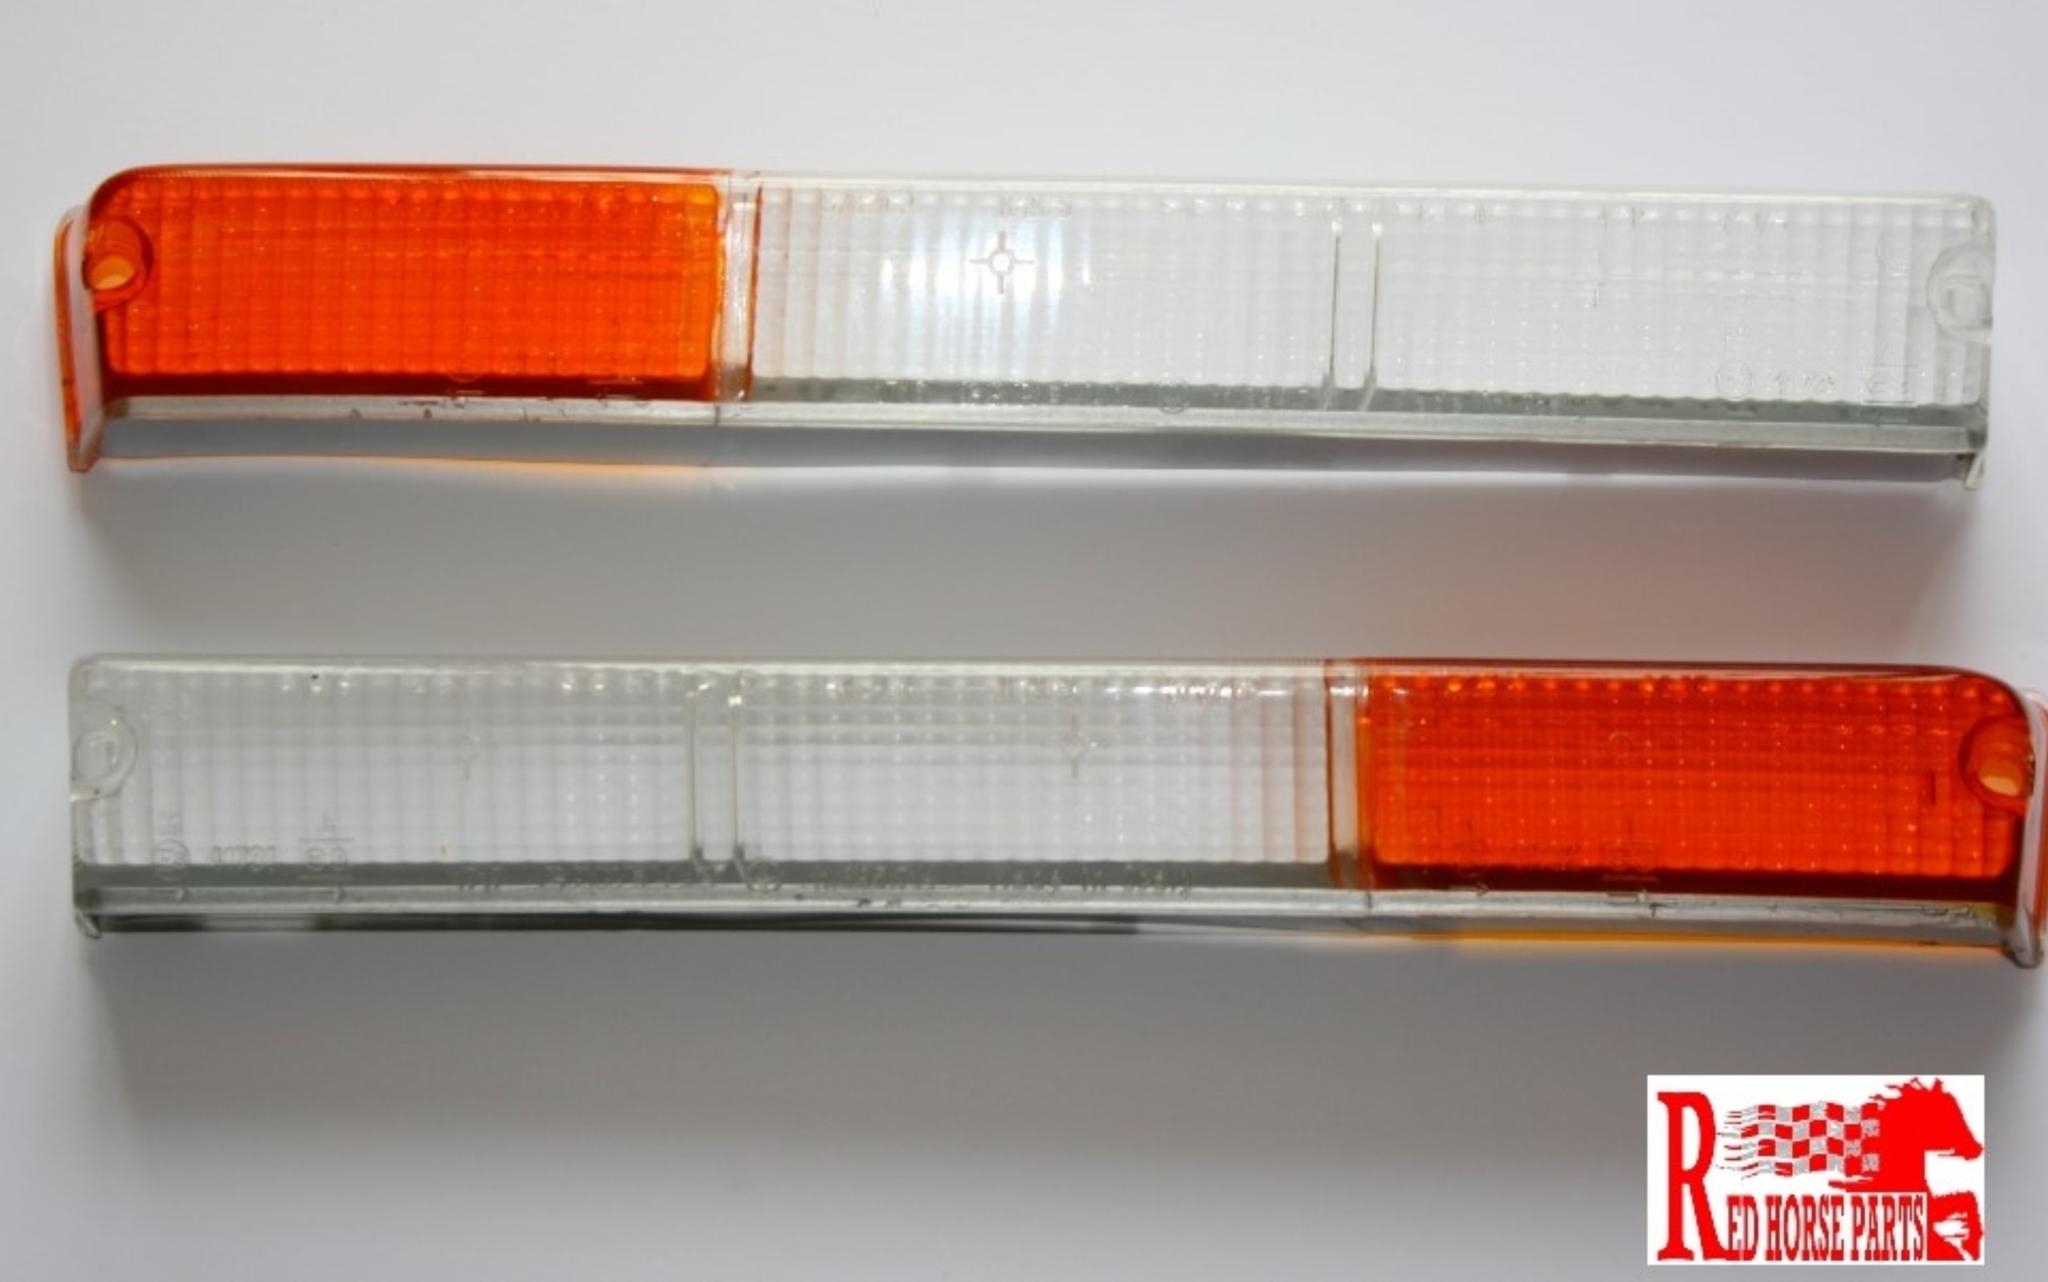 Ferrari 328 foglight indicator lens